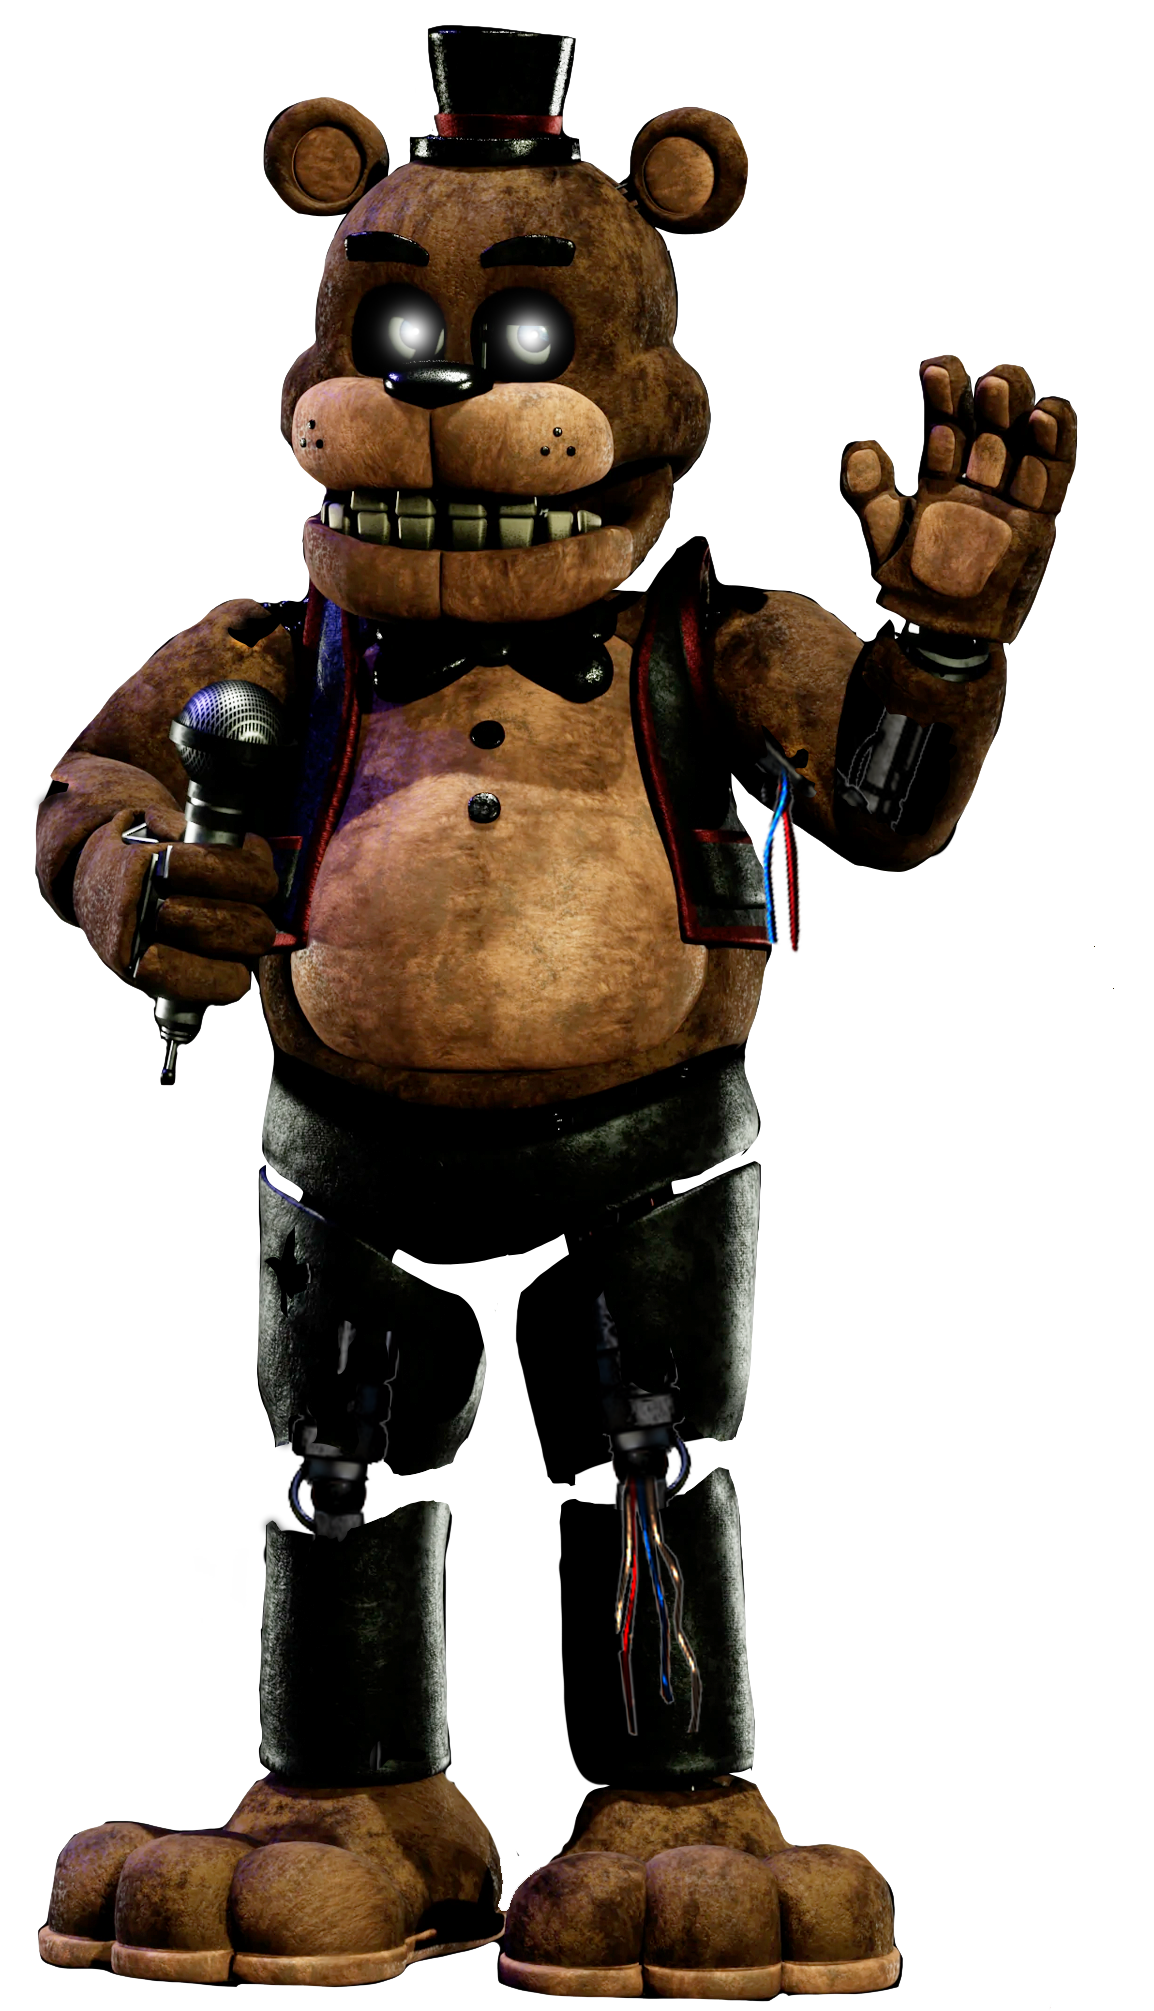 FNAF 1: Stuffed Freddy Full Body by Estevamgamer on DeviantArt